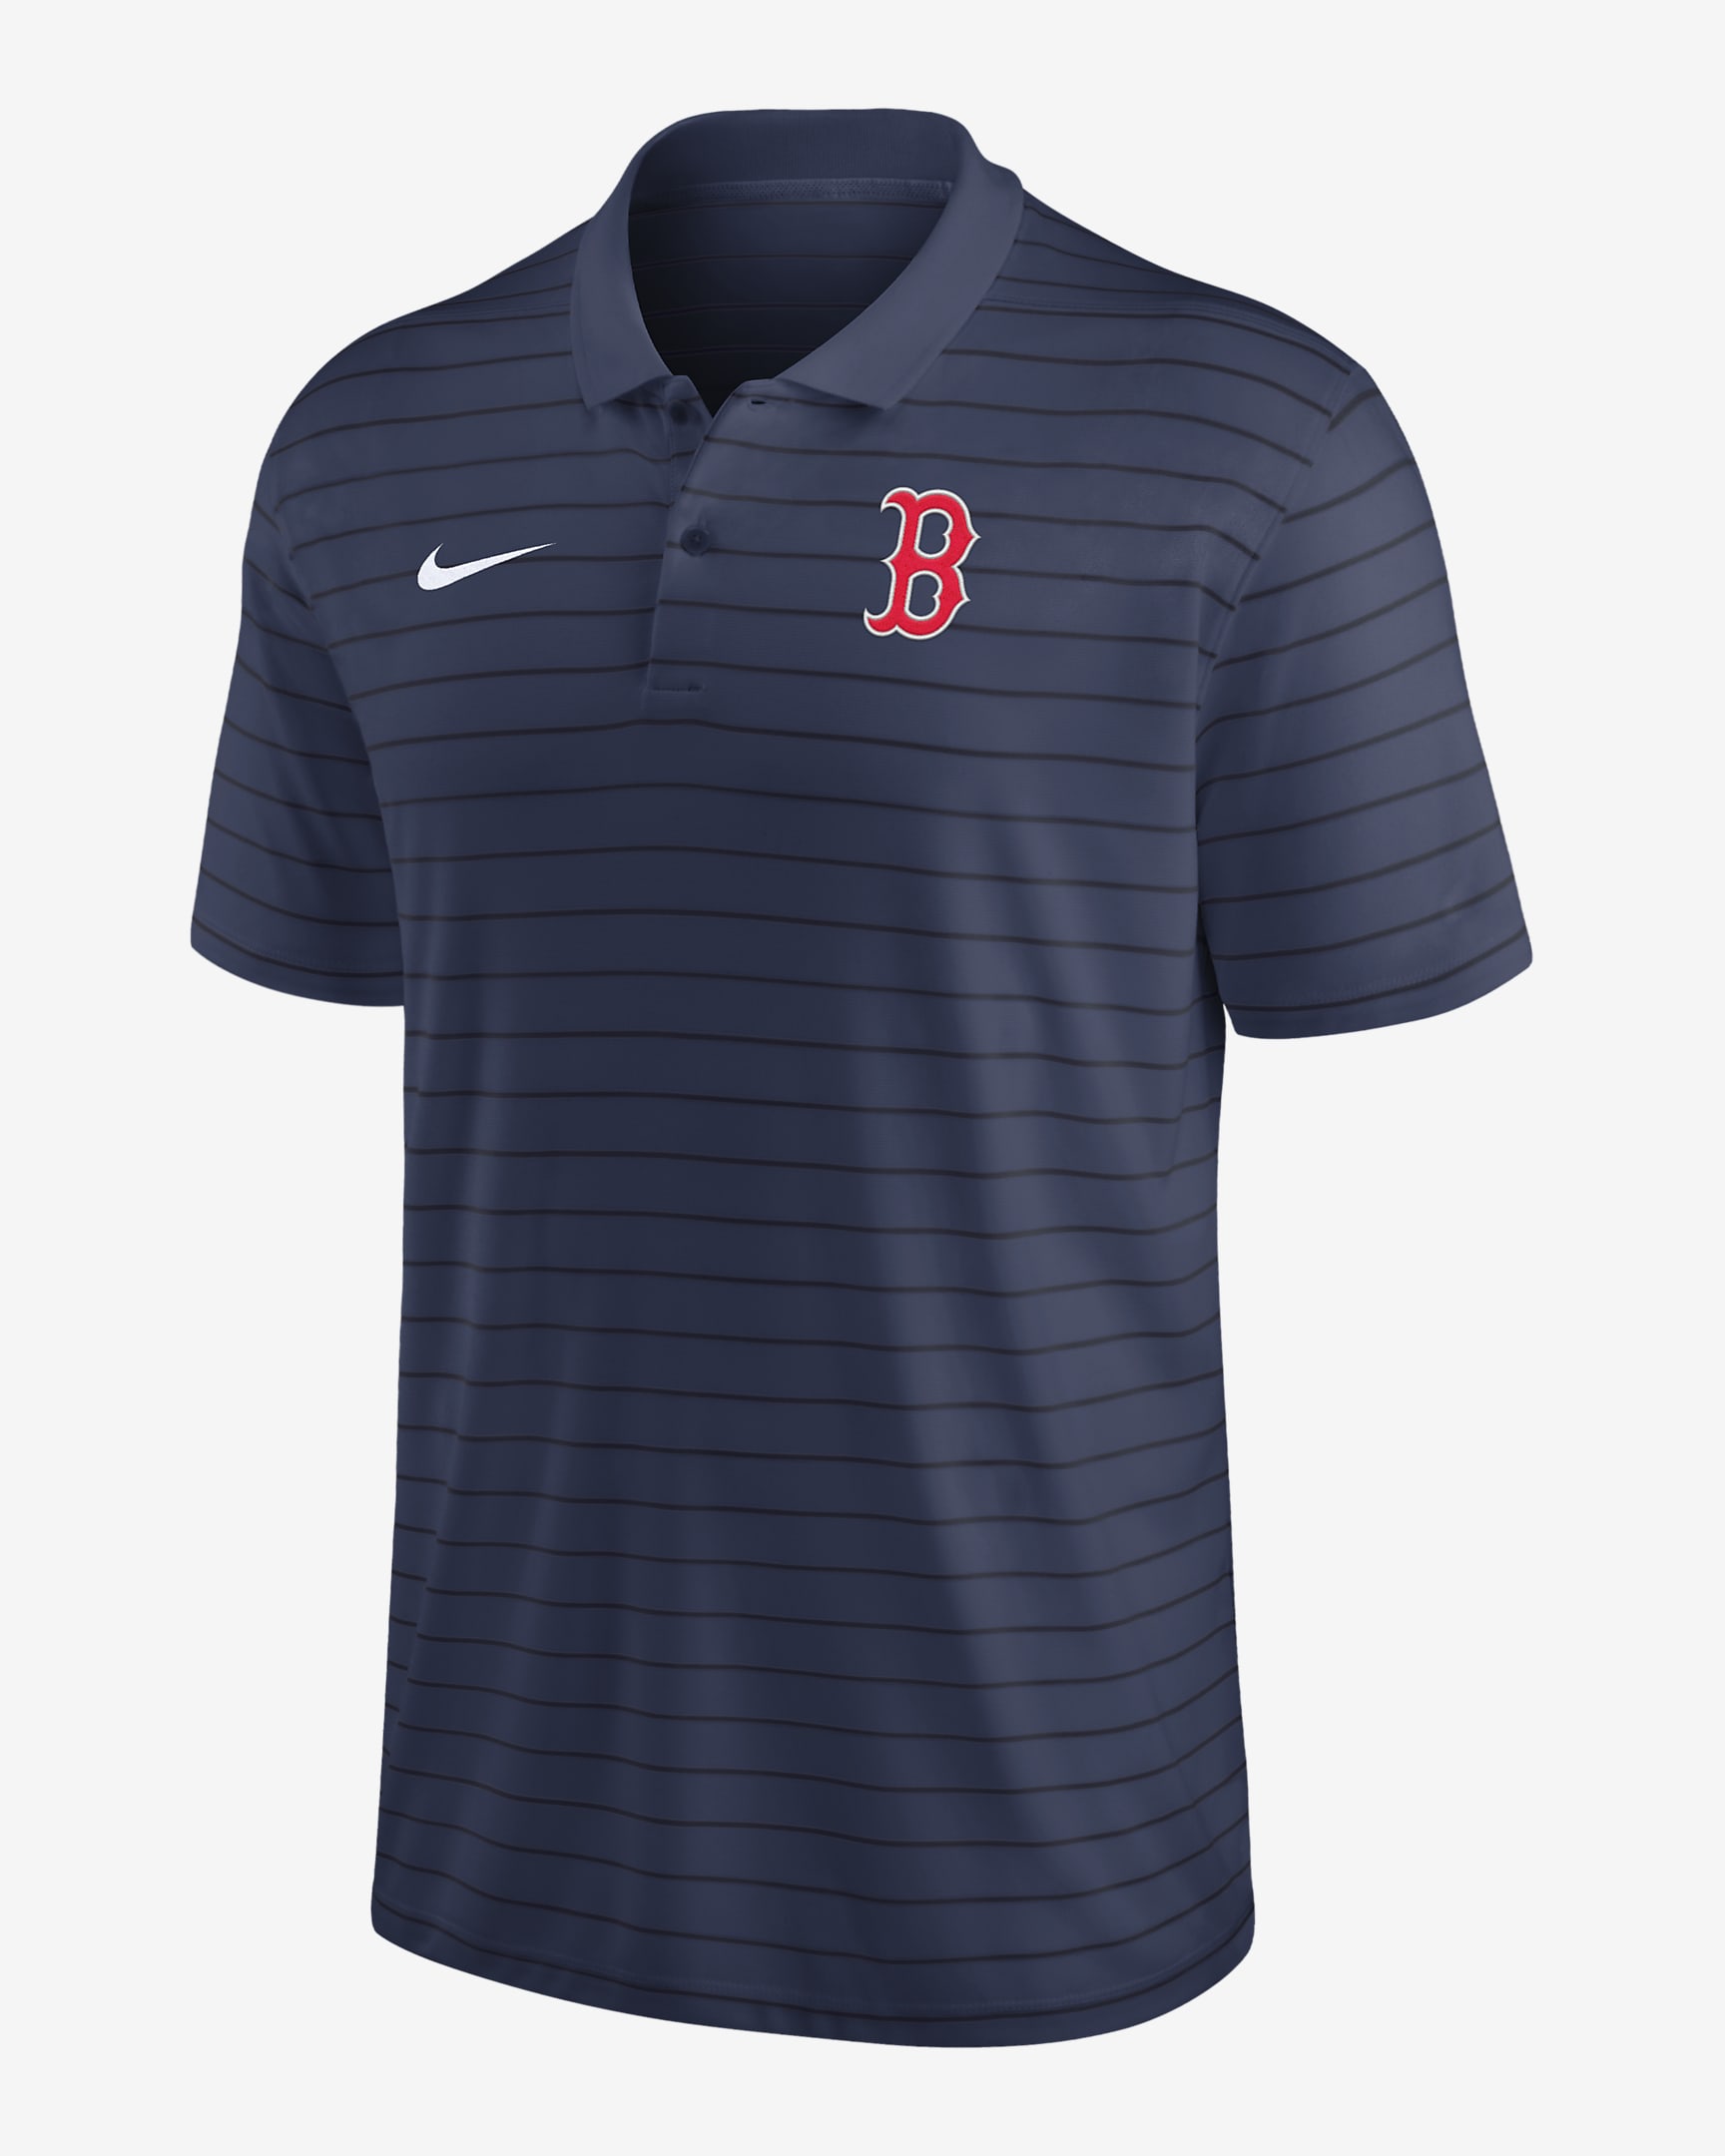 Nike Dri-FIT Victory Striped (MLB Boston Red Sox) Men's Polo. Nike.com